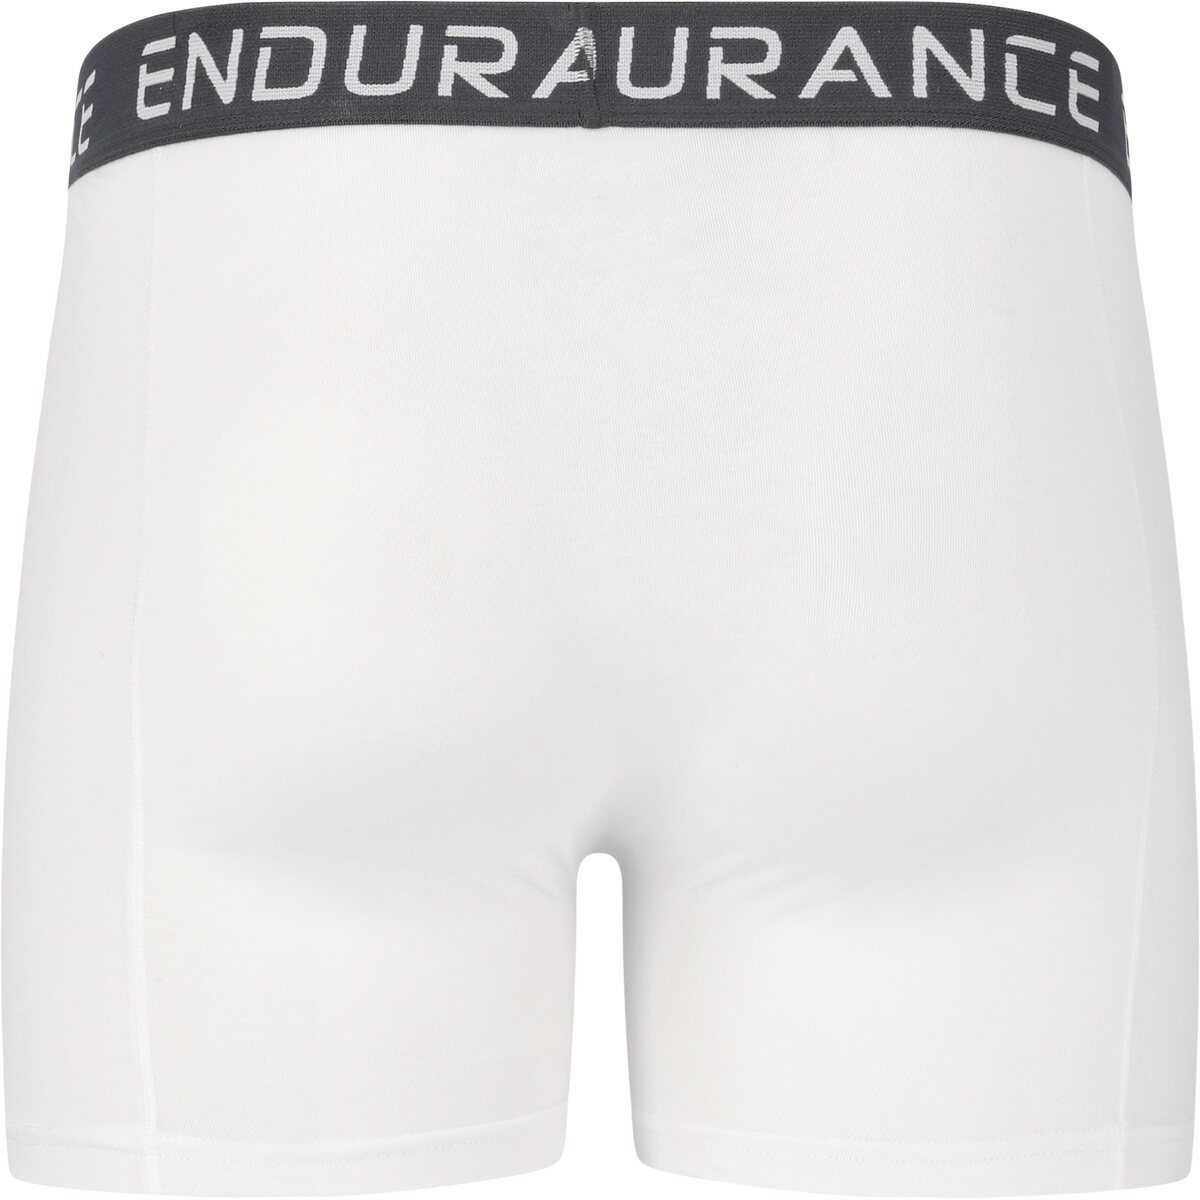 Underwear -  endurance Burke M Boxershorts 3-Pack